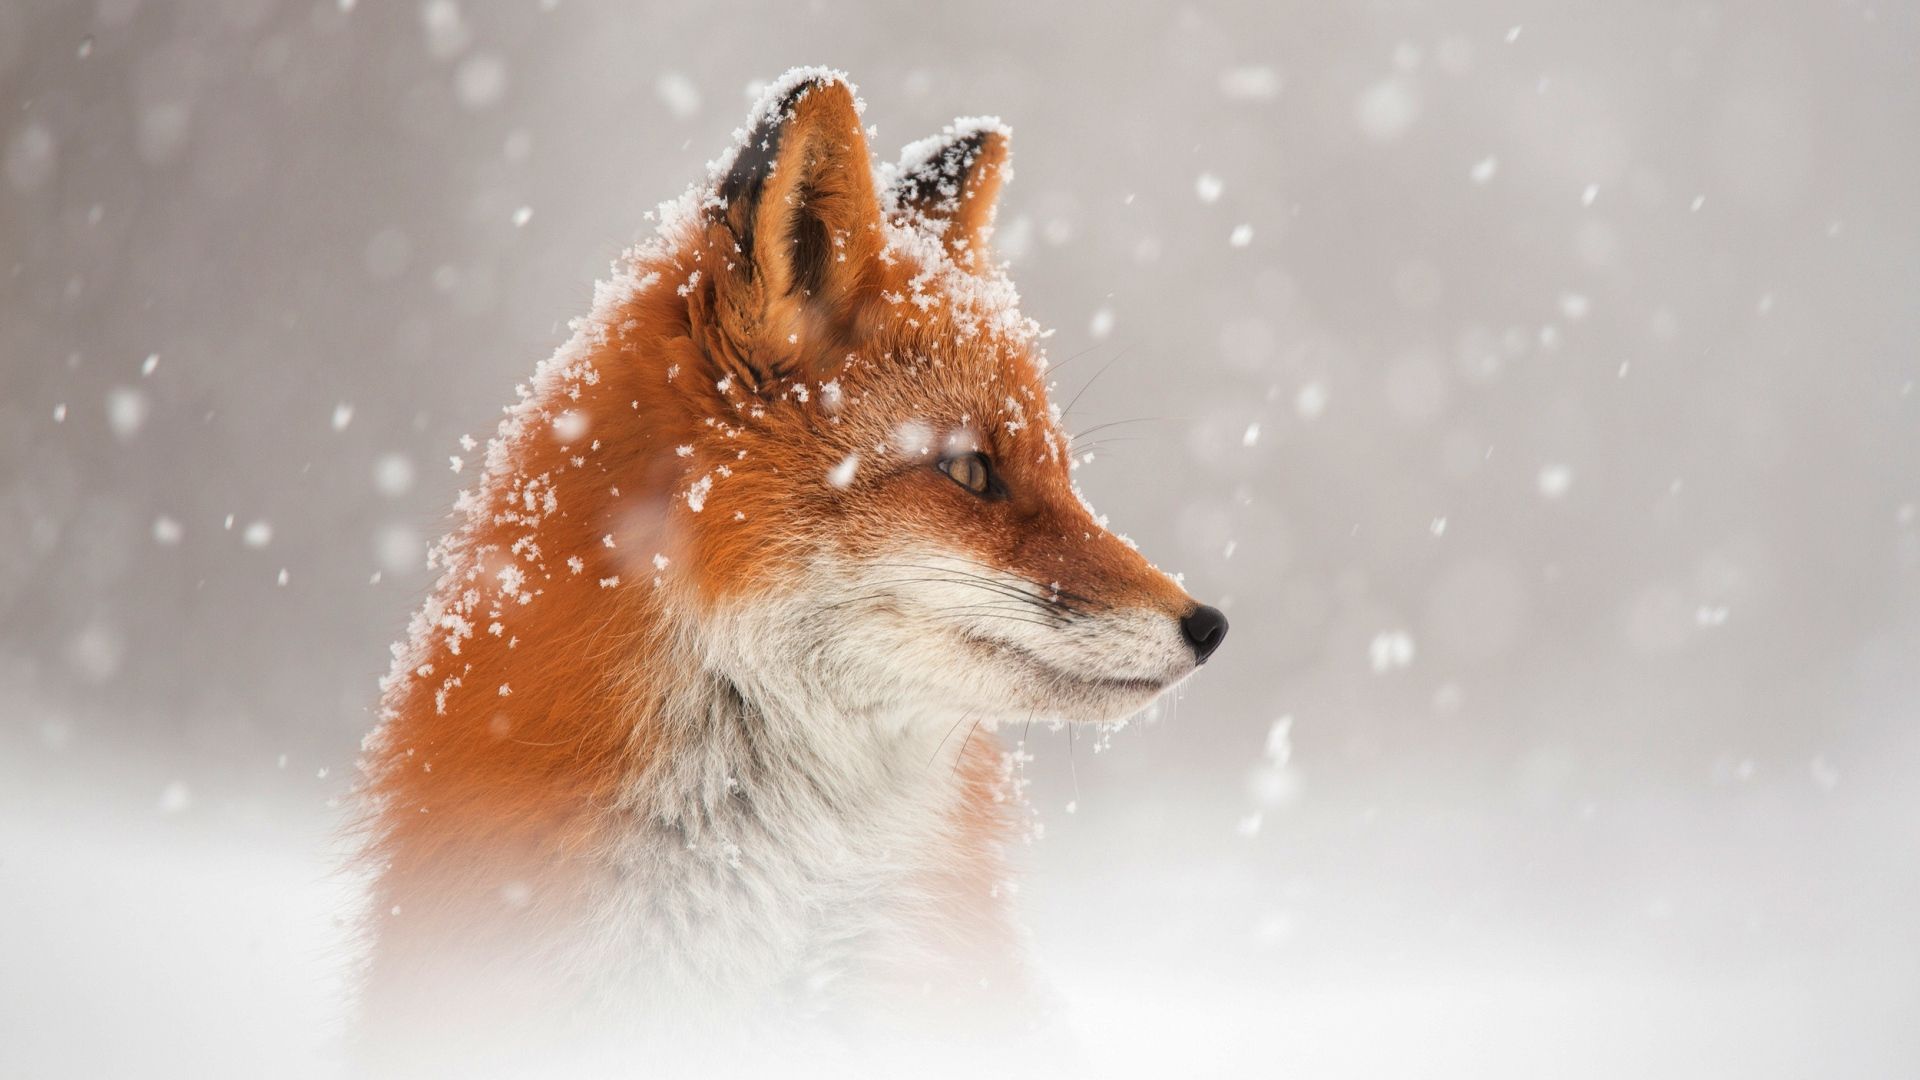 Red fox in the snow in winter Desktop wallpaper 1920x1080